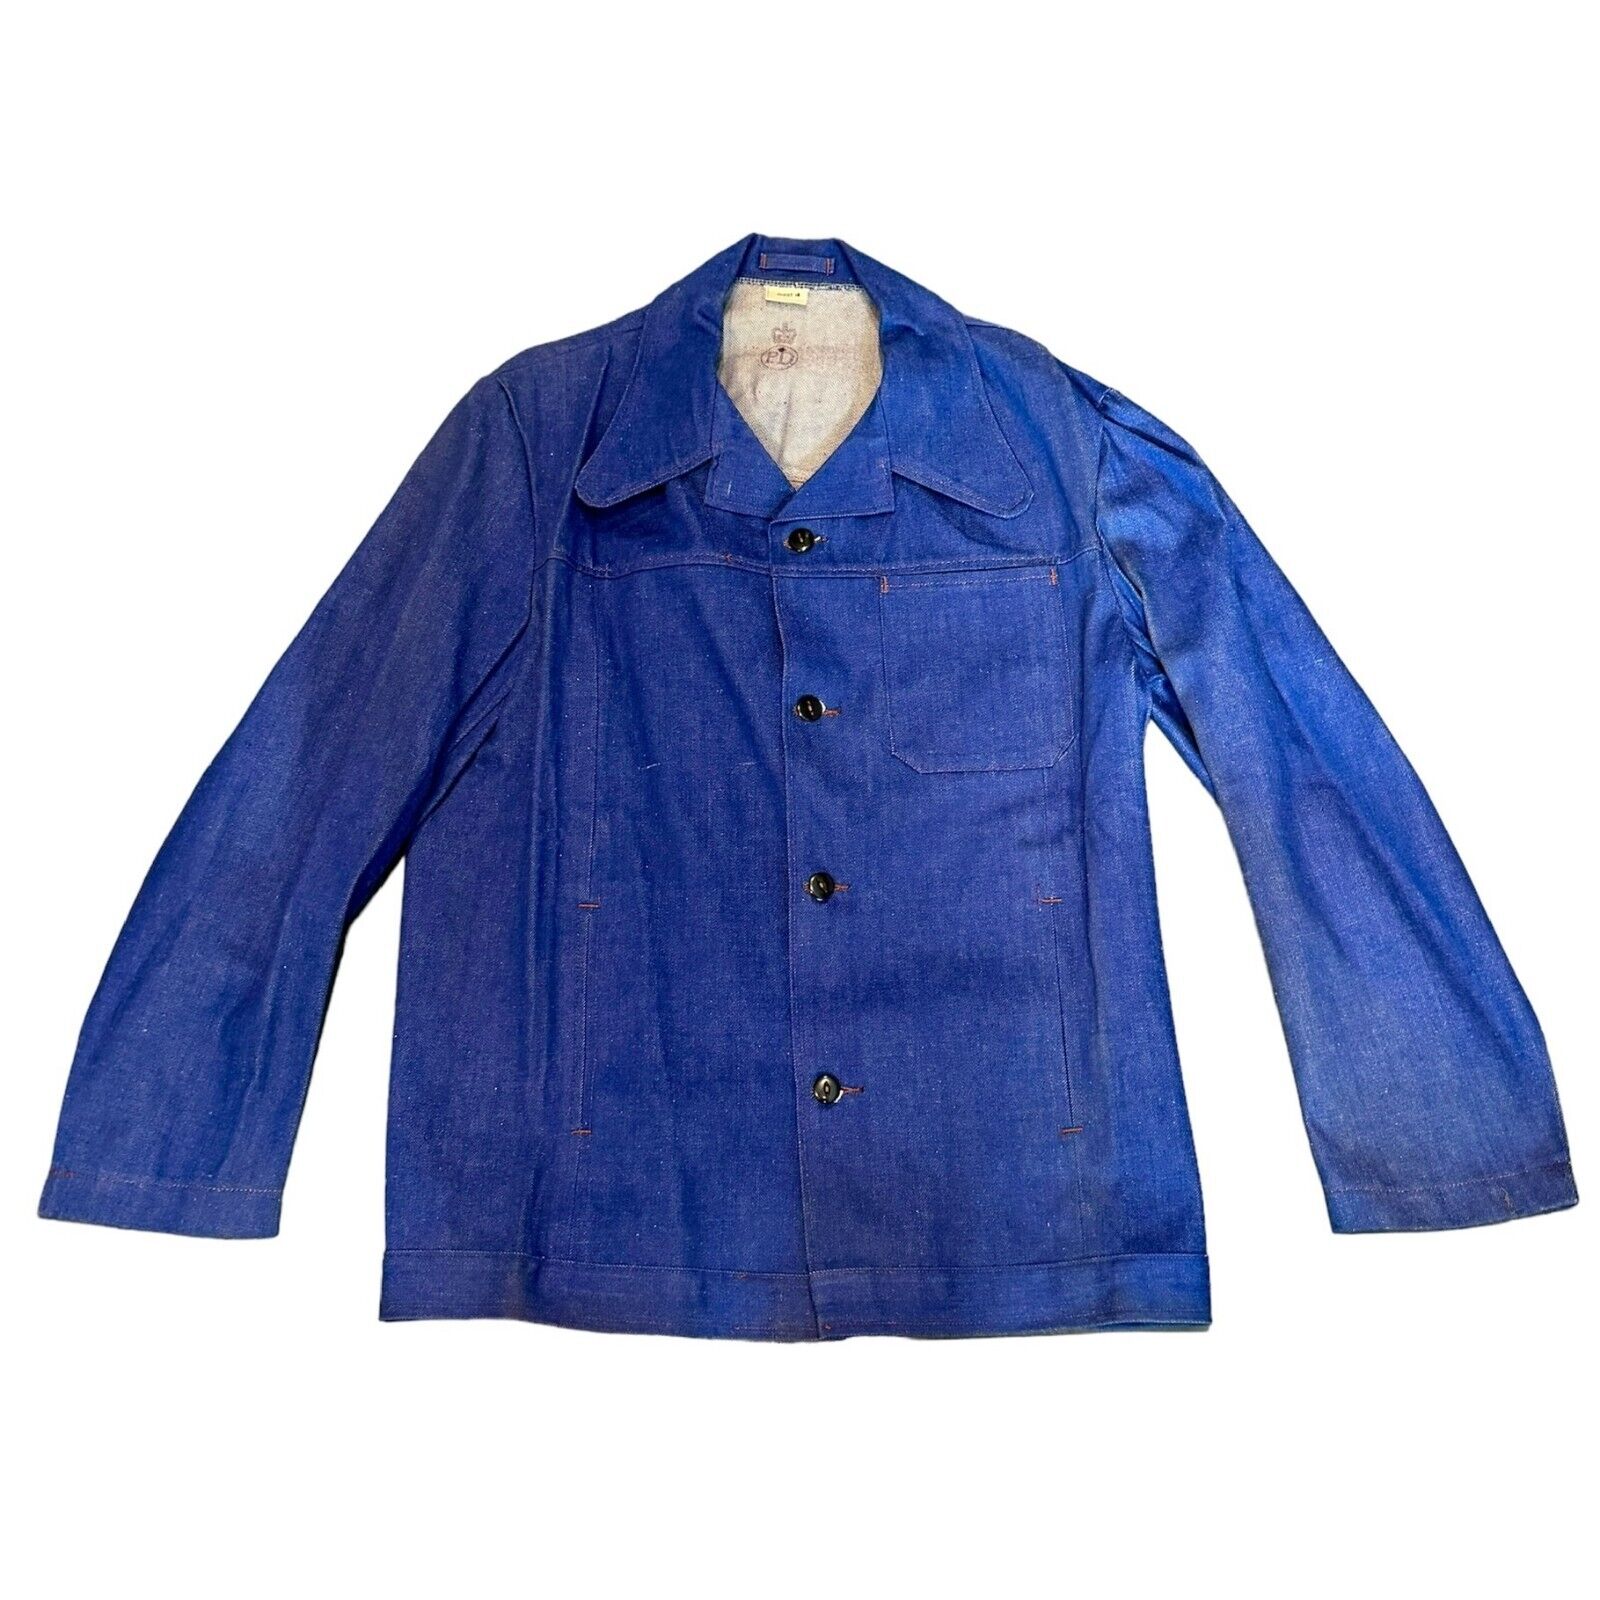 Vintage Dartmoor UK Prison Issue Uniform Denim Jacket Blue Size 44